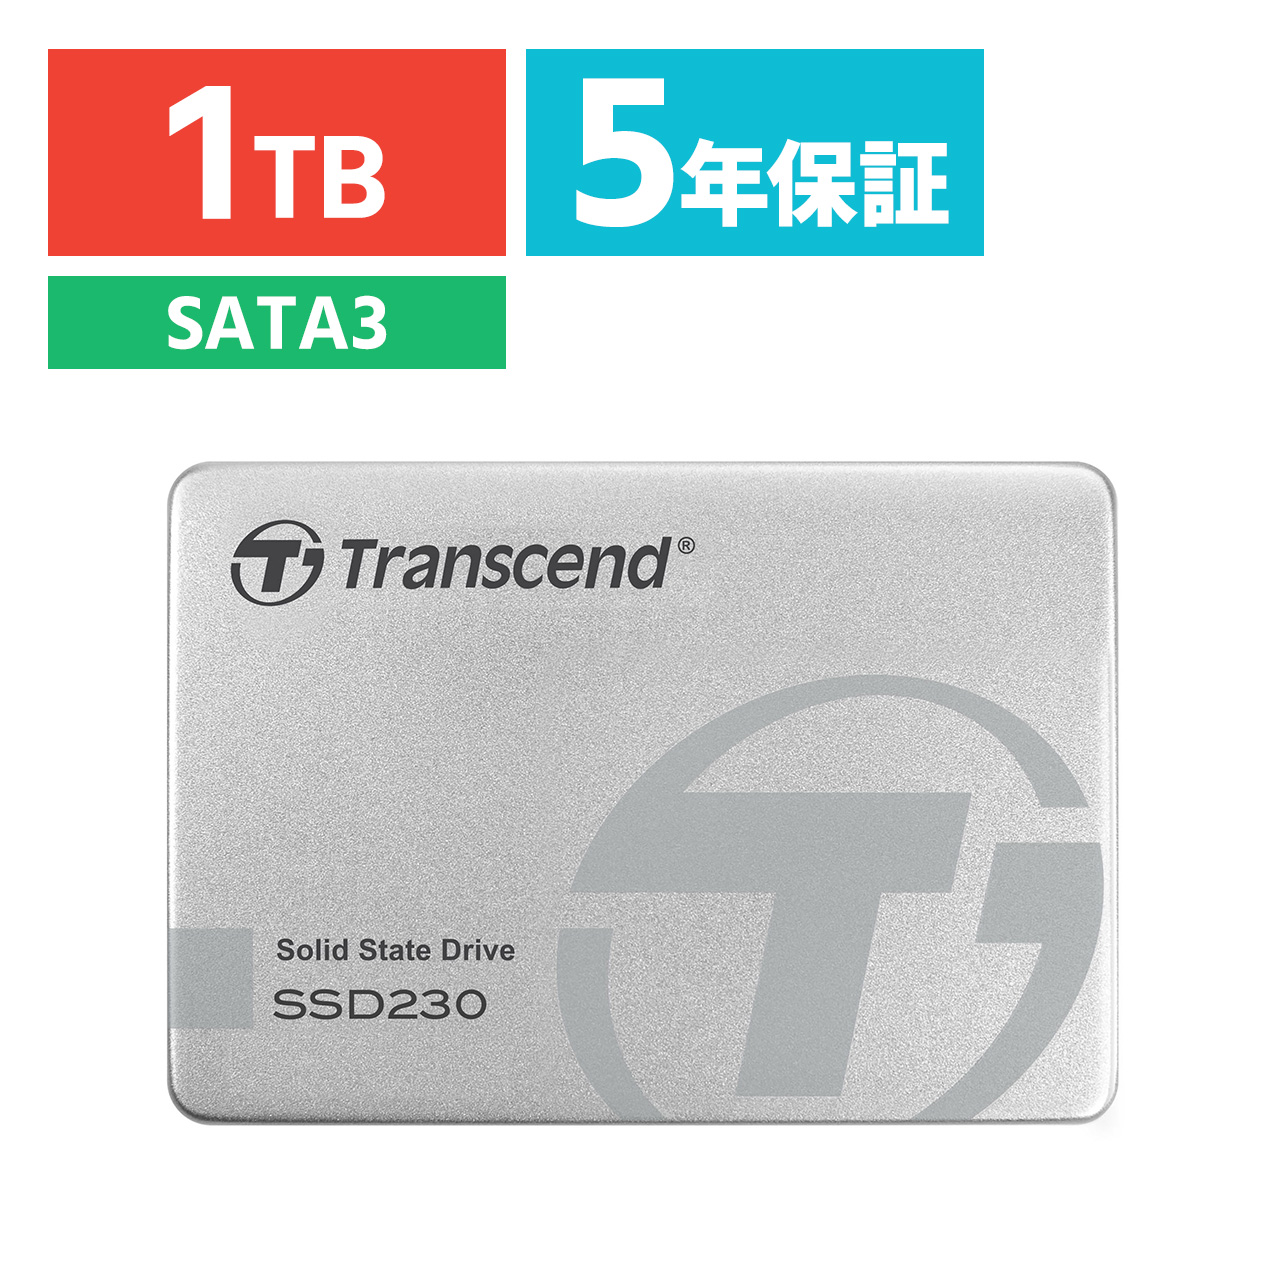 【SUNEAST】1TB 内蔵SSD 2.5インチ 新品！45g材質